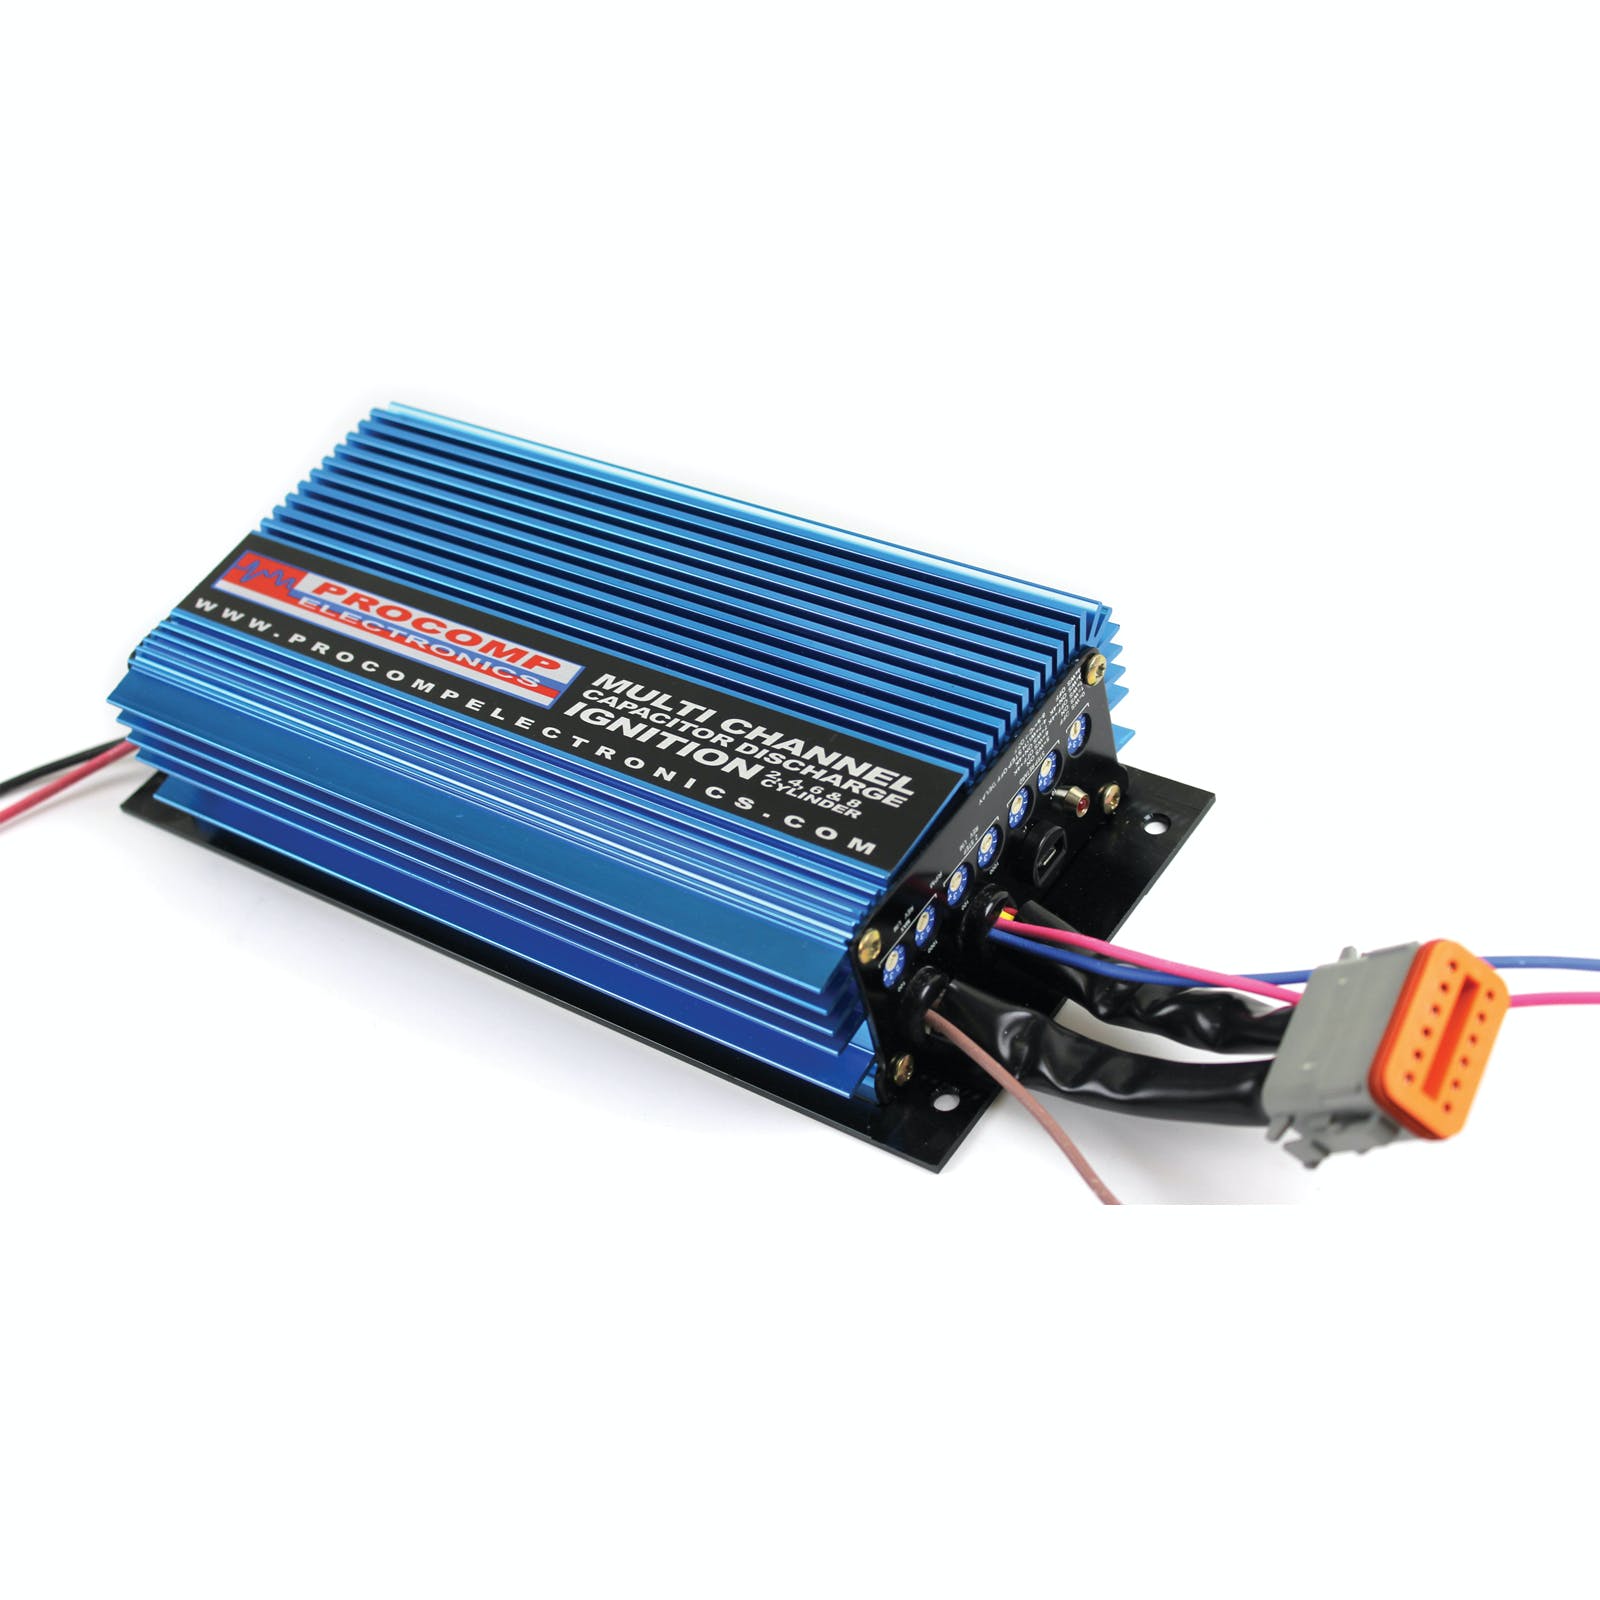 Speedmaster PCE380.1002 Digital DIS-4 CDI 6AL Ignition Box Dual Rev. Limiter and Retard